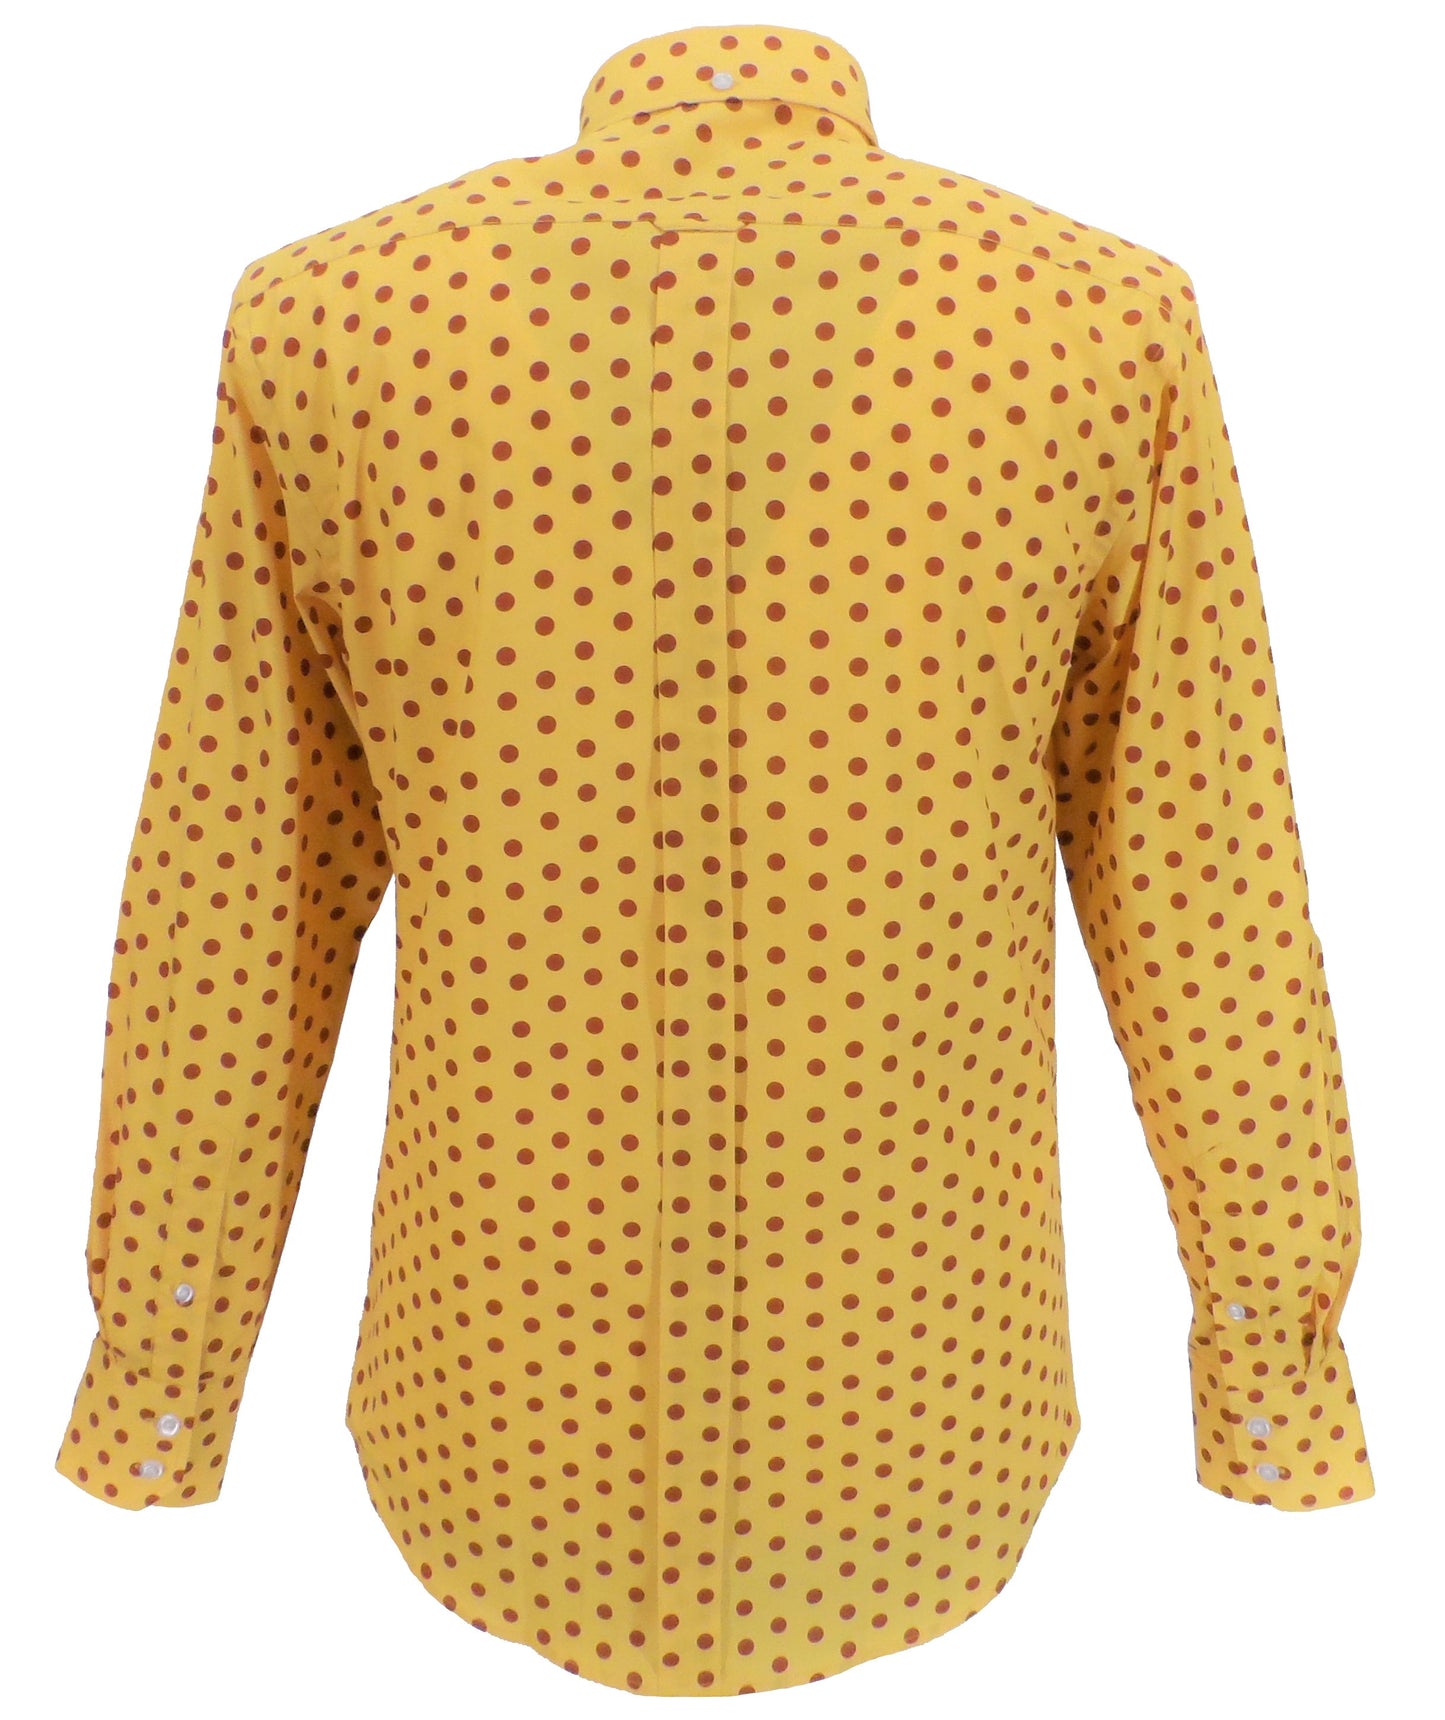 Mazeys Mens Mustard/Brown Retro Mod Polka Dot 100% Cotton Shirts…